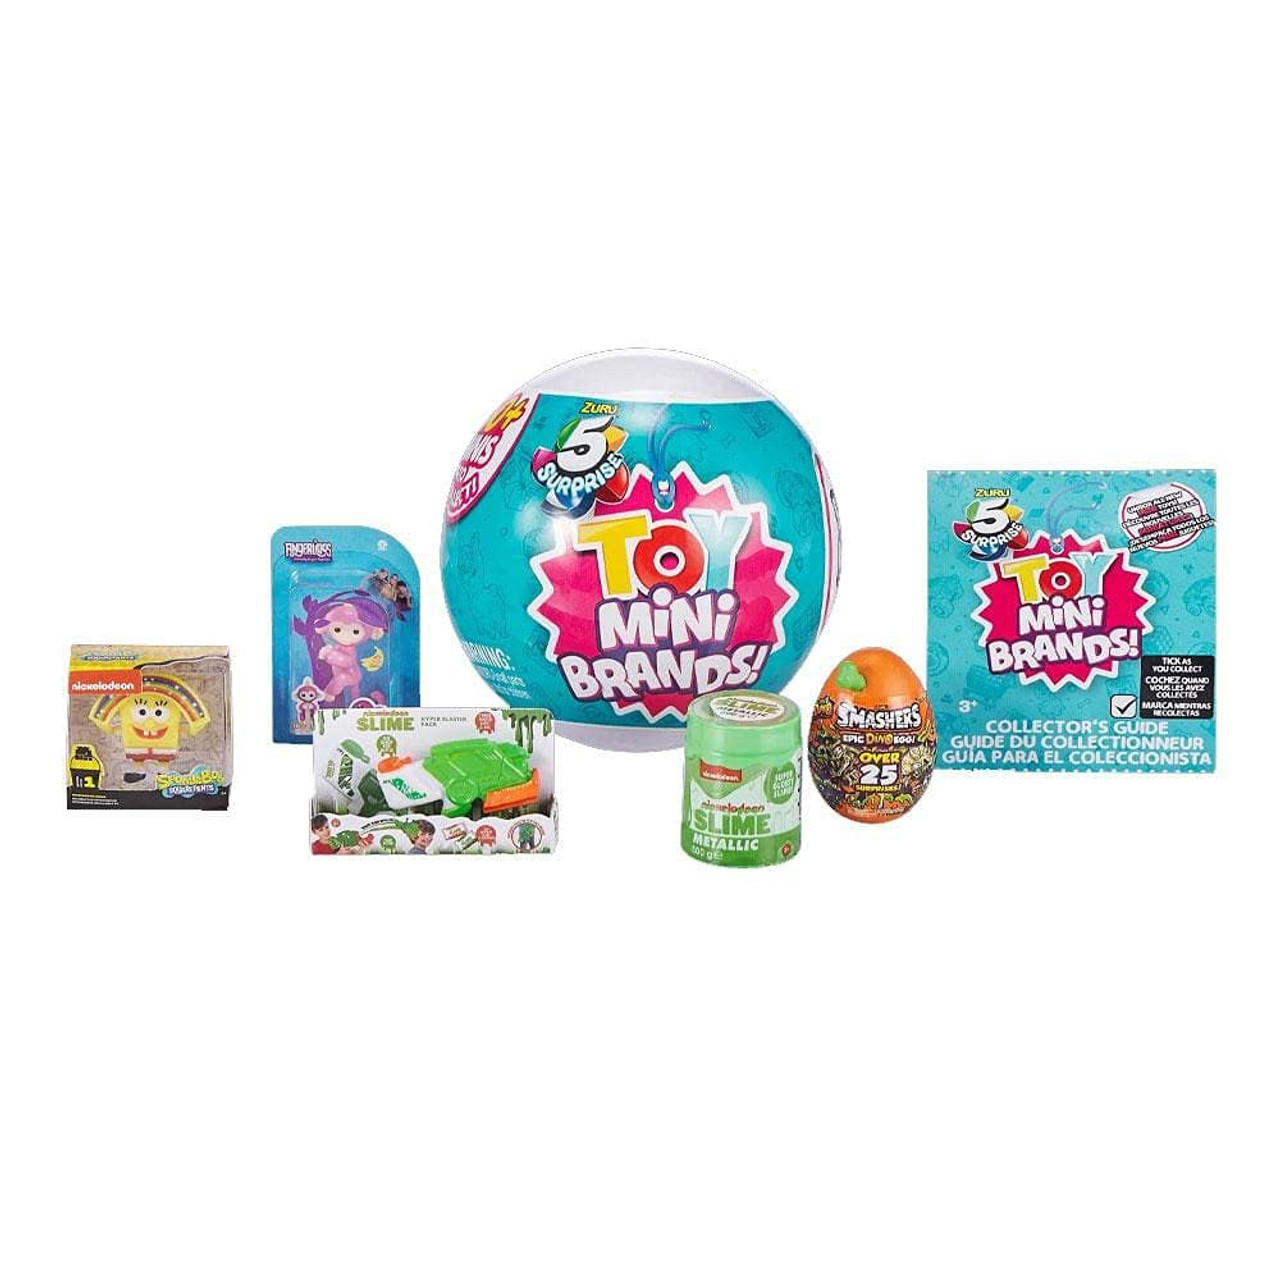 ZURU Toys Surprise Mini Brands Balls Series 3, 5 Pack